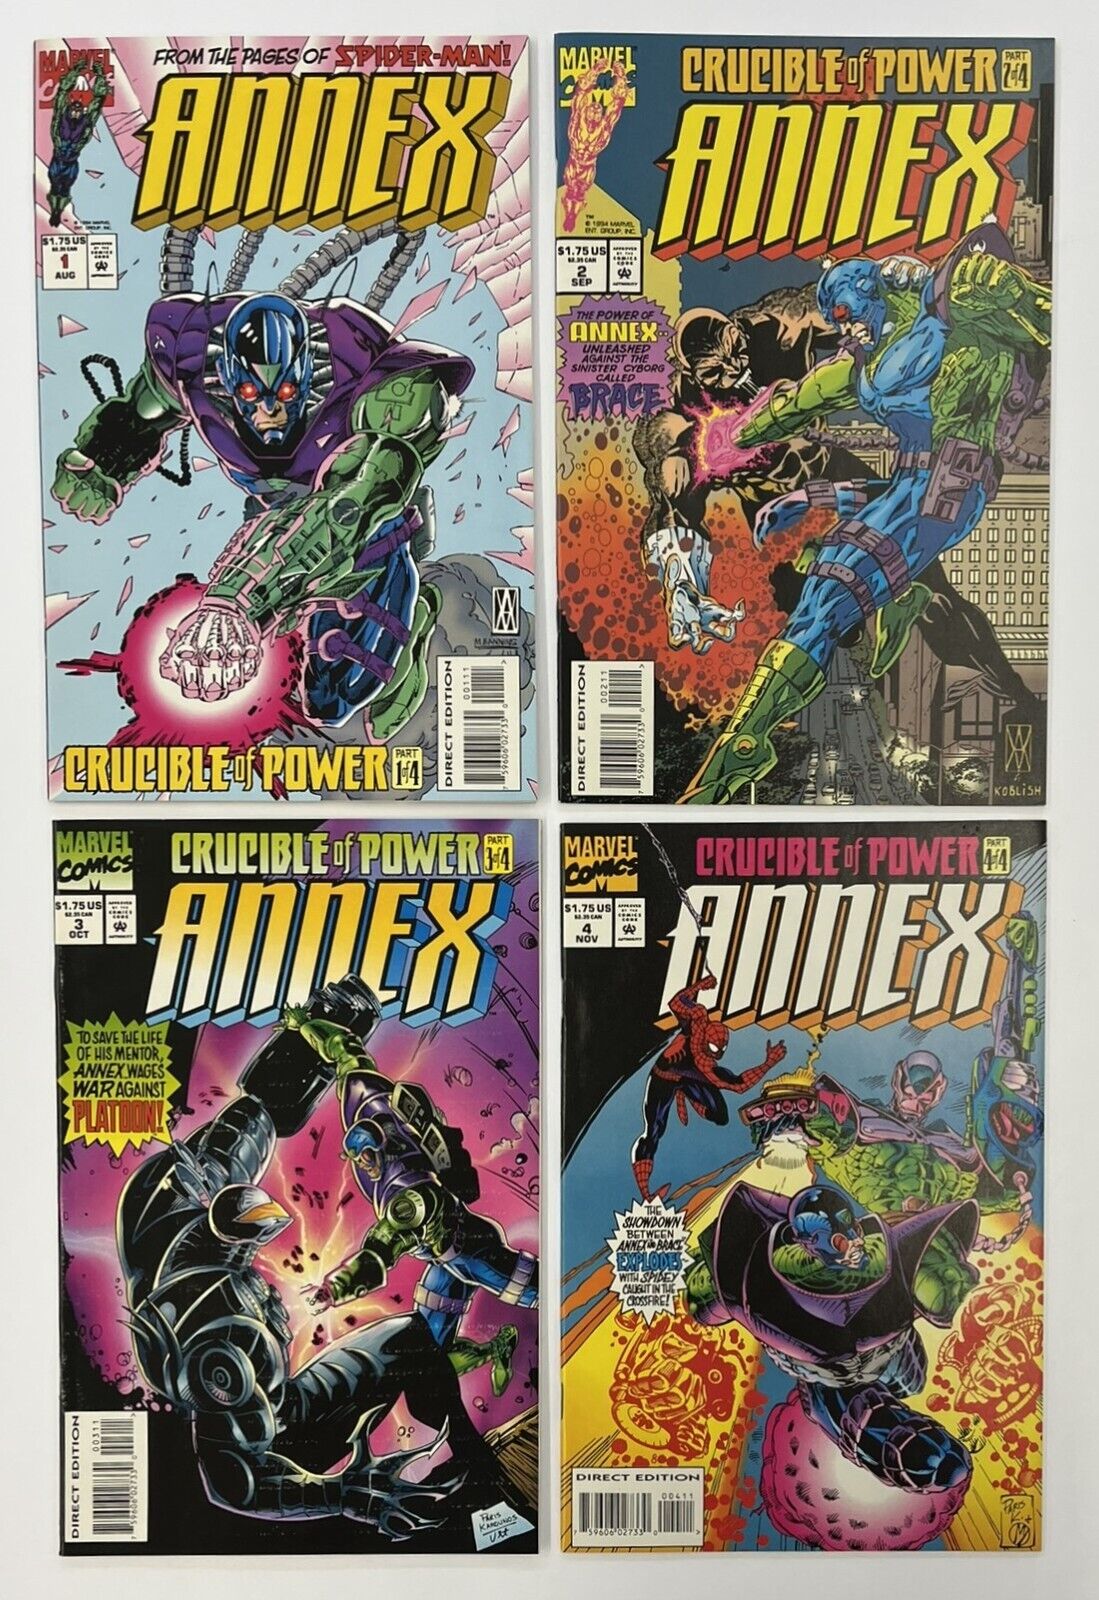 Annex #1-4 Marvel 1994 Complete Limited Series by Jack C. Harris